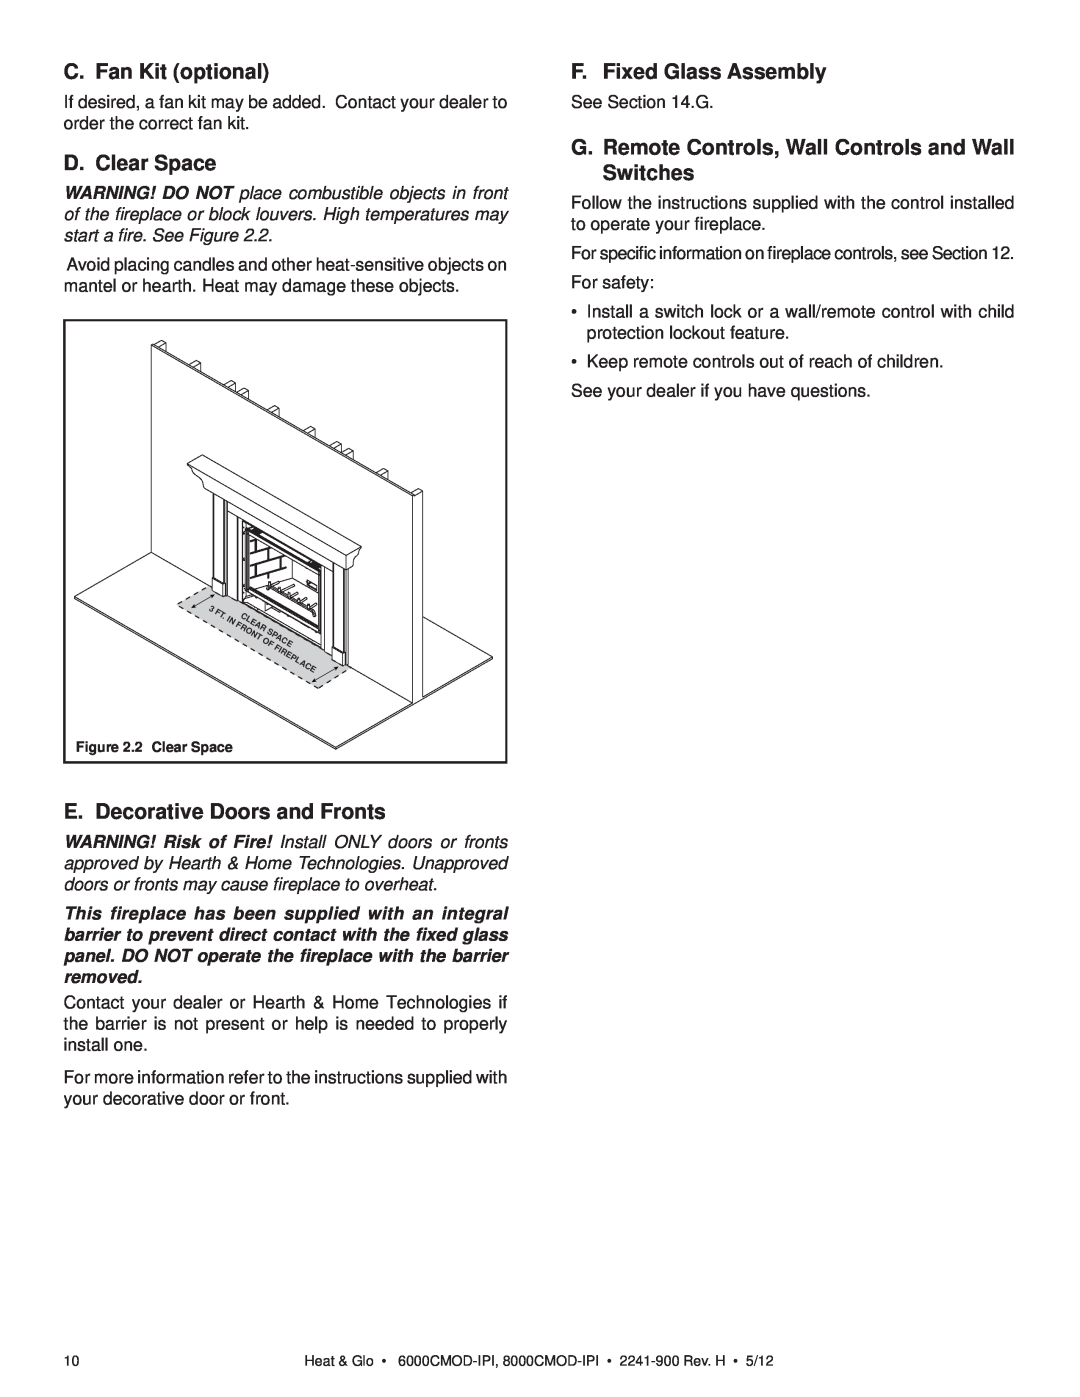 Heat & Glo LifeStyle 8000CMOD-IPI, 6000CMOD-IPI C. Fan Kit optional, D. Clear Space, E. Decorative Doors and Fronts 